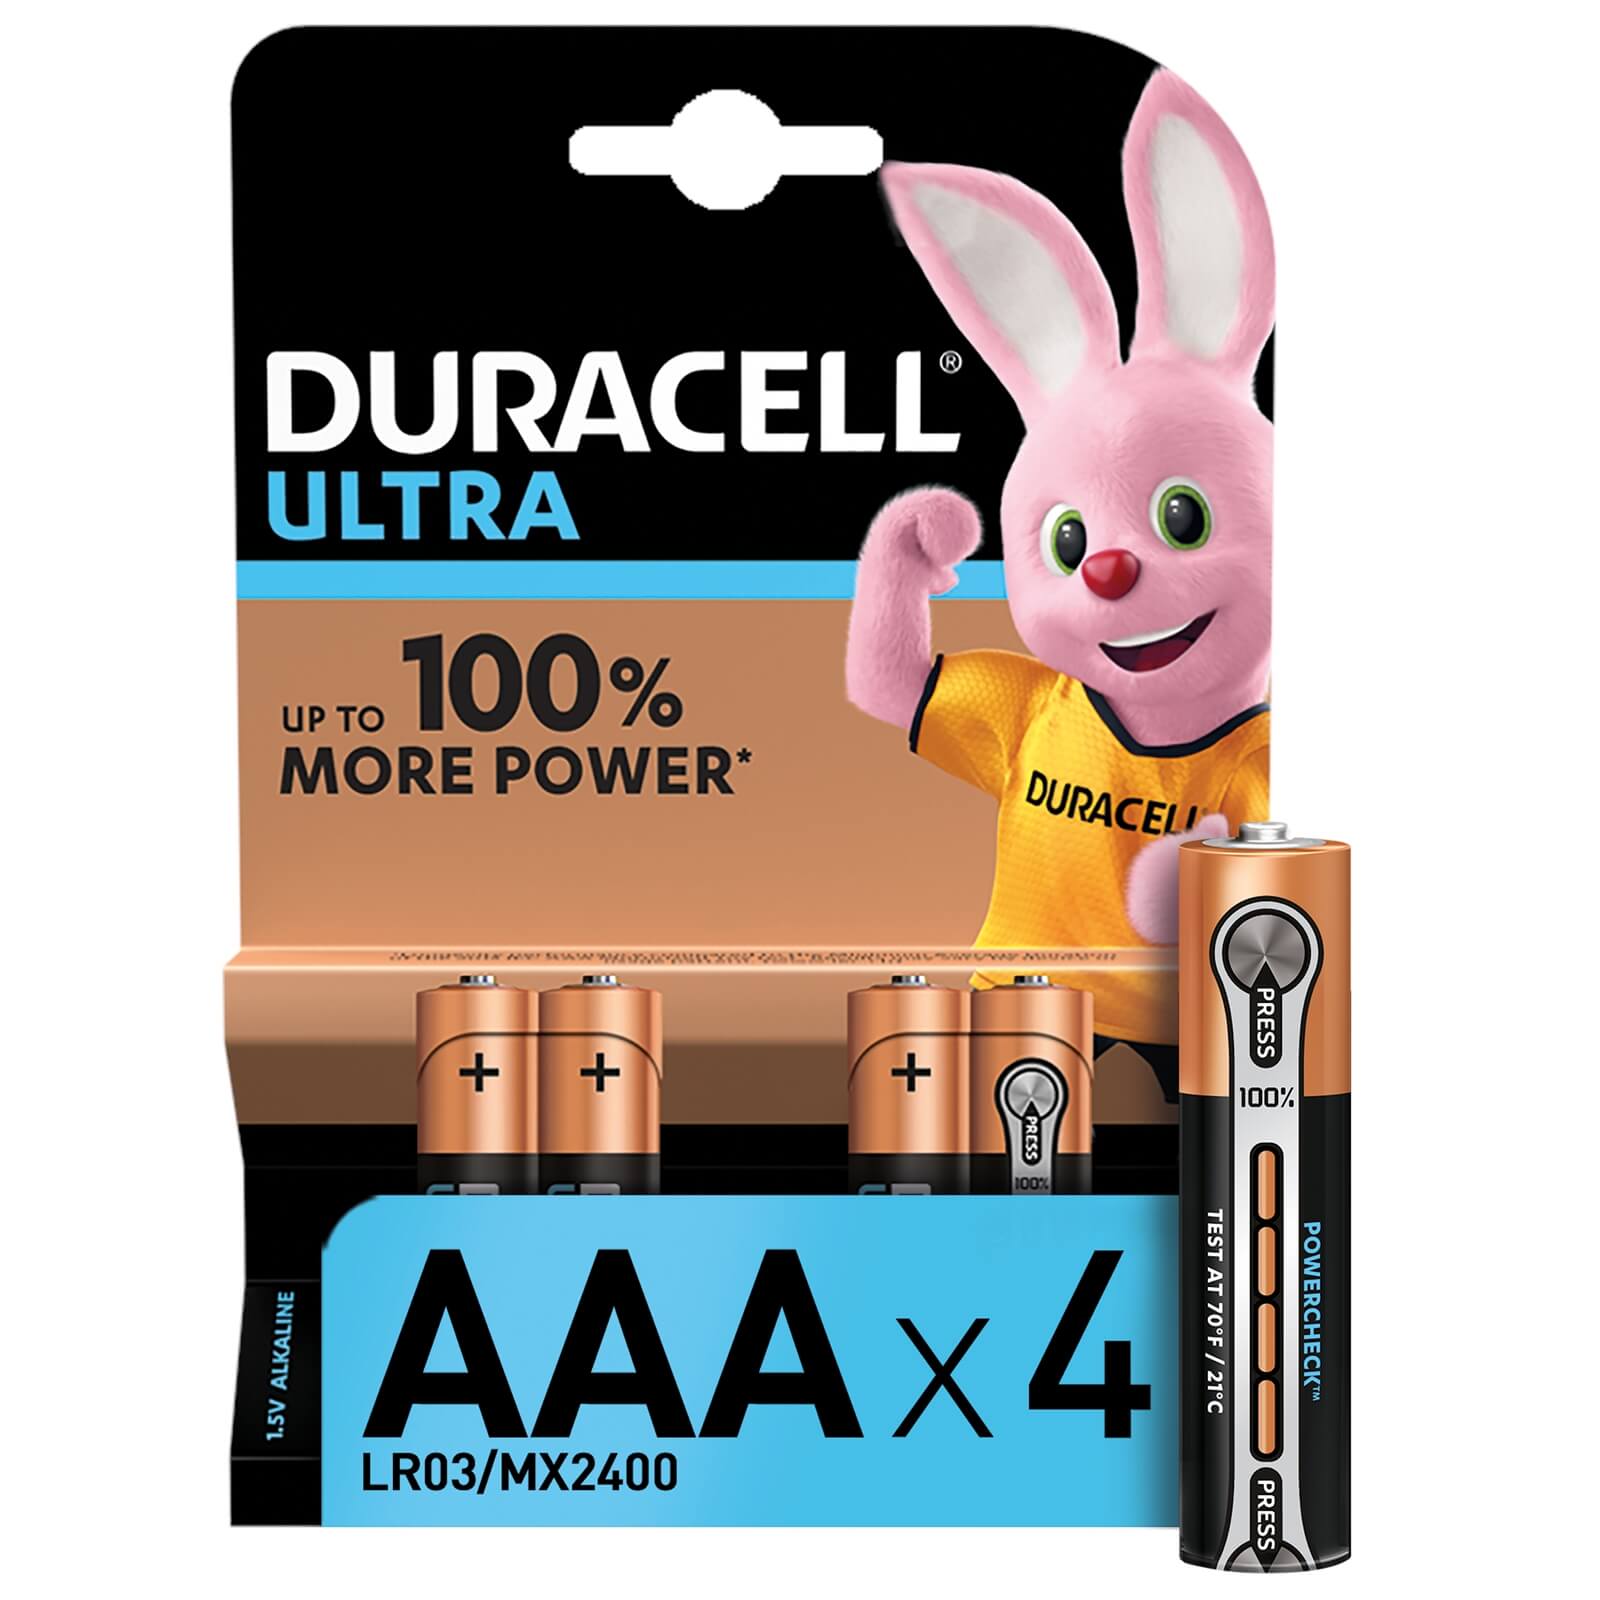 Duracell Ultra AAA Batteries - 4 Pack